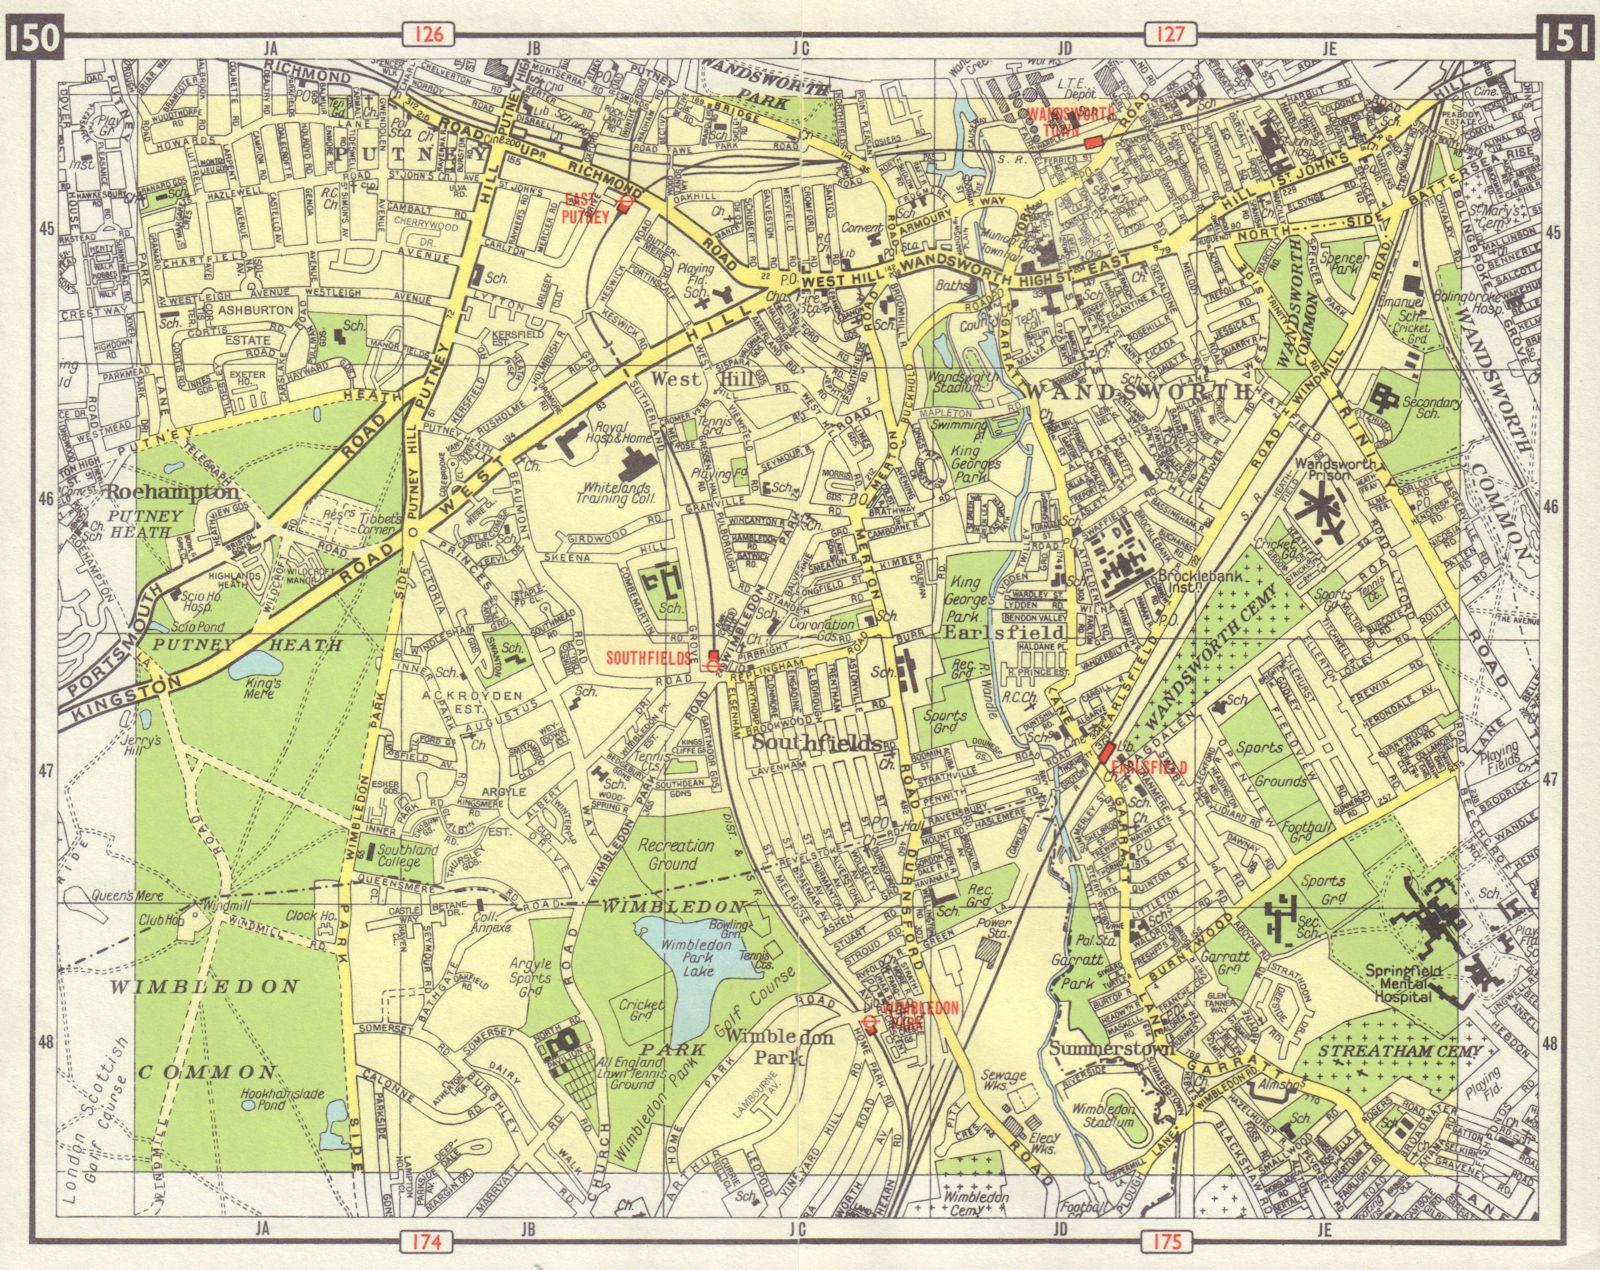 SW LONDON Wandsworth Putney Wandsworth West Hill Earlsfield Wimbledon 1965 map